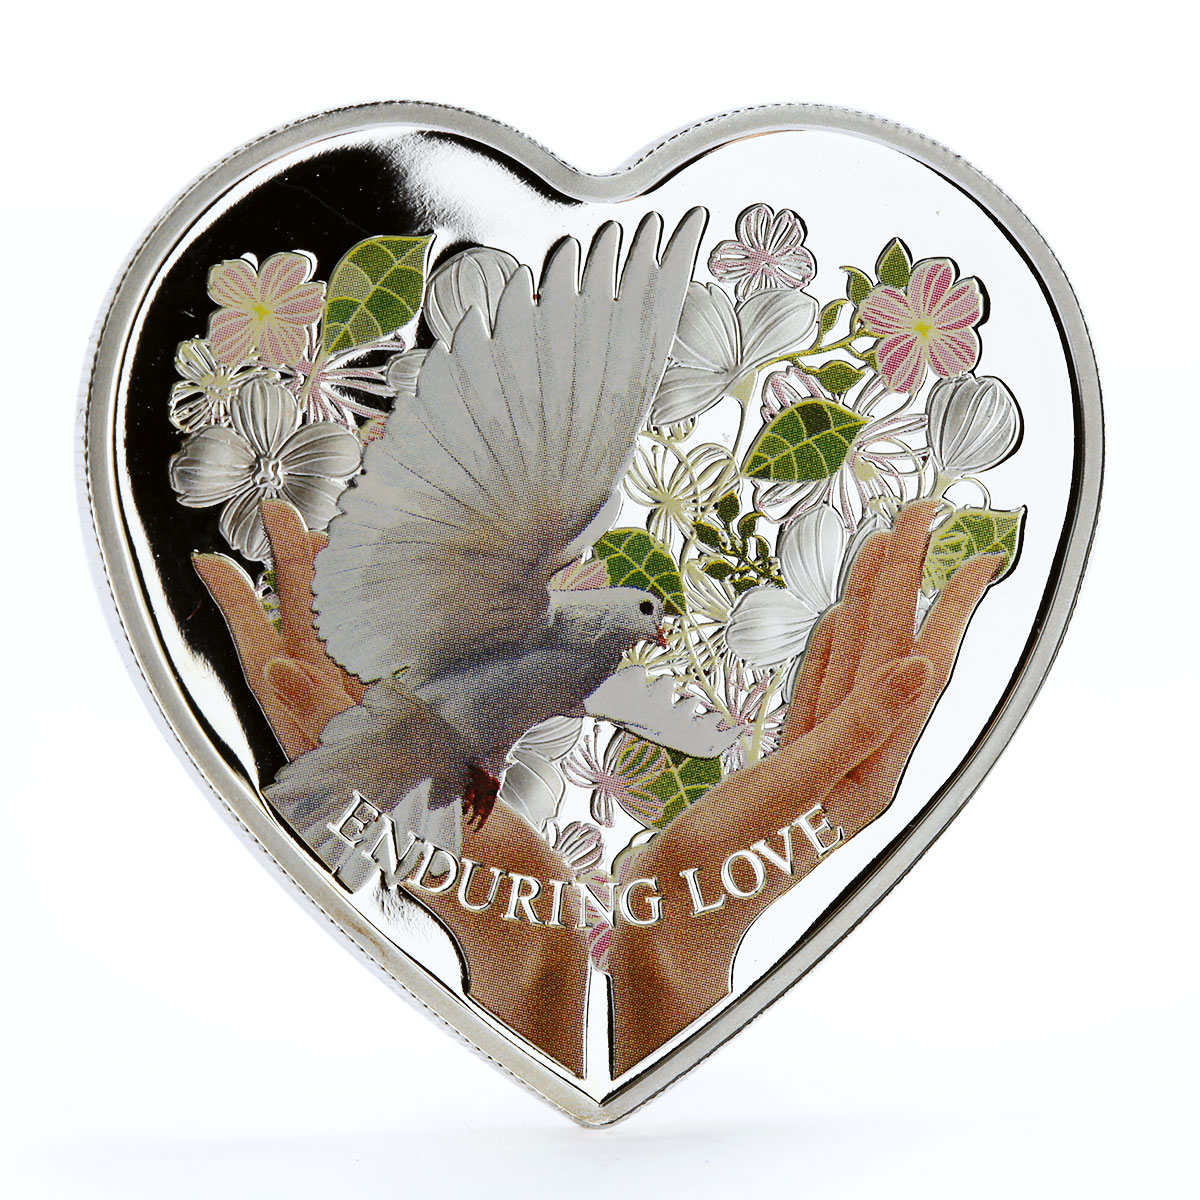 Cook Islands 1 dollar Enduring Love Doves Birds colored silver coin 2012